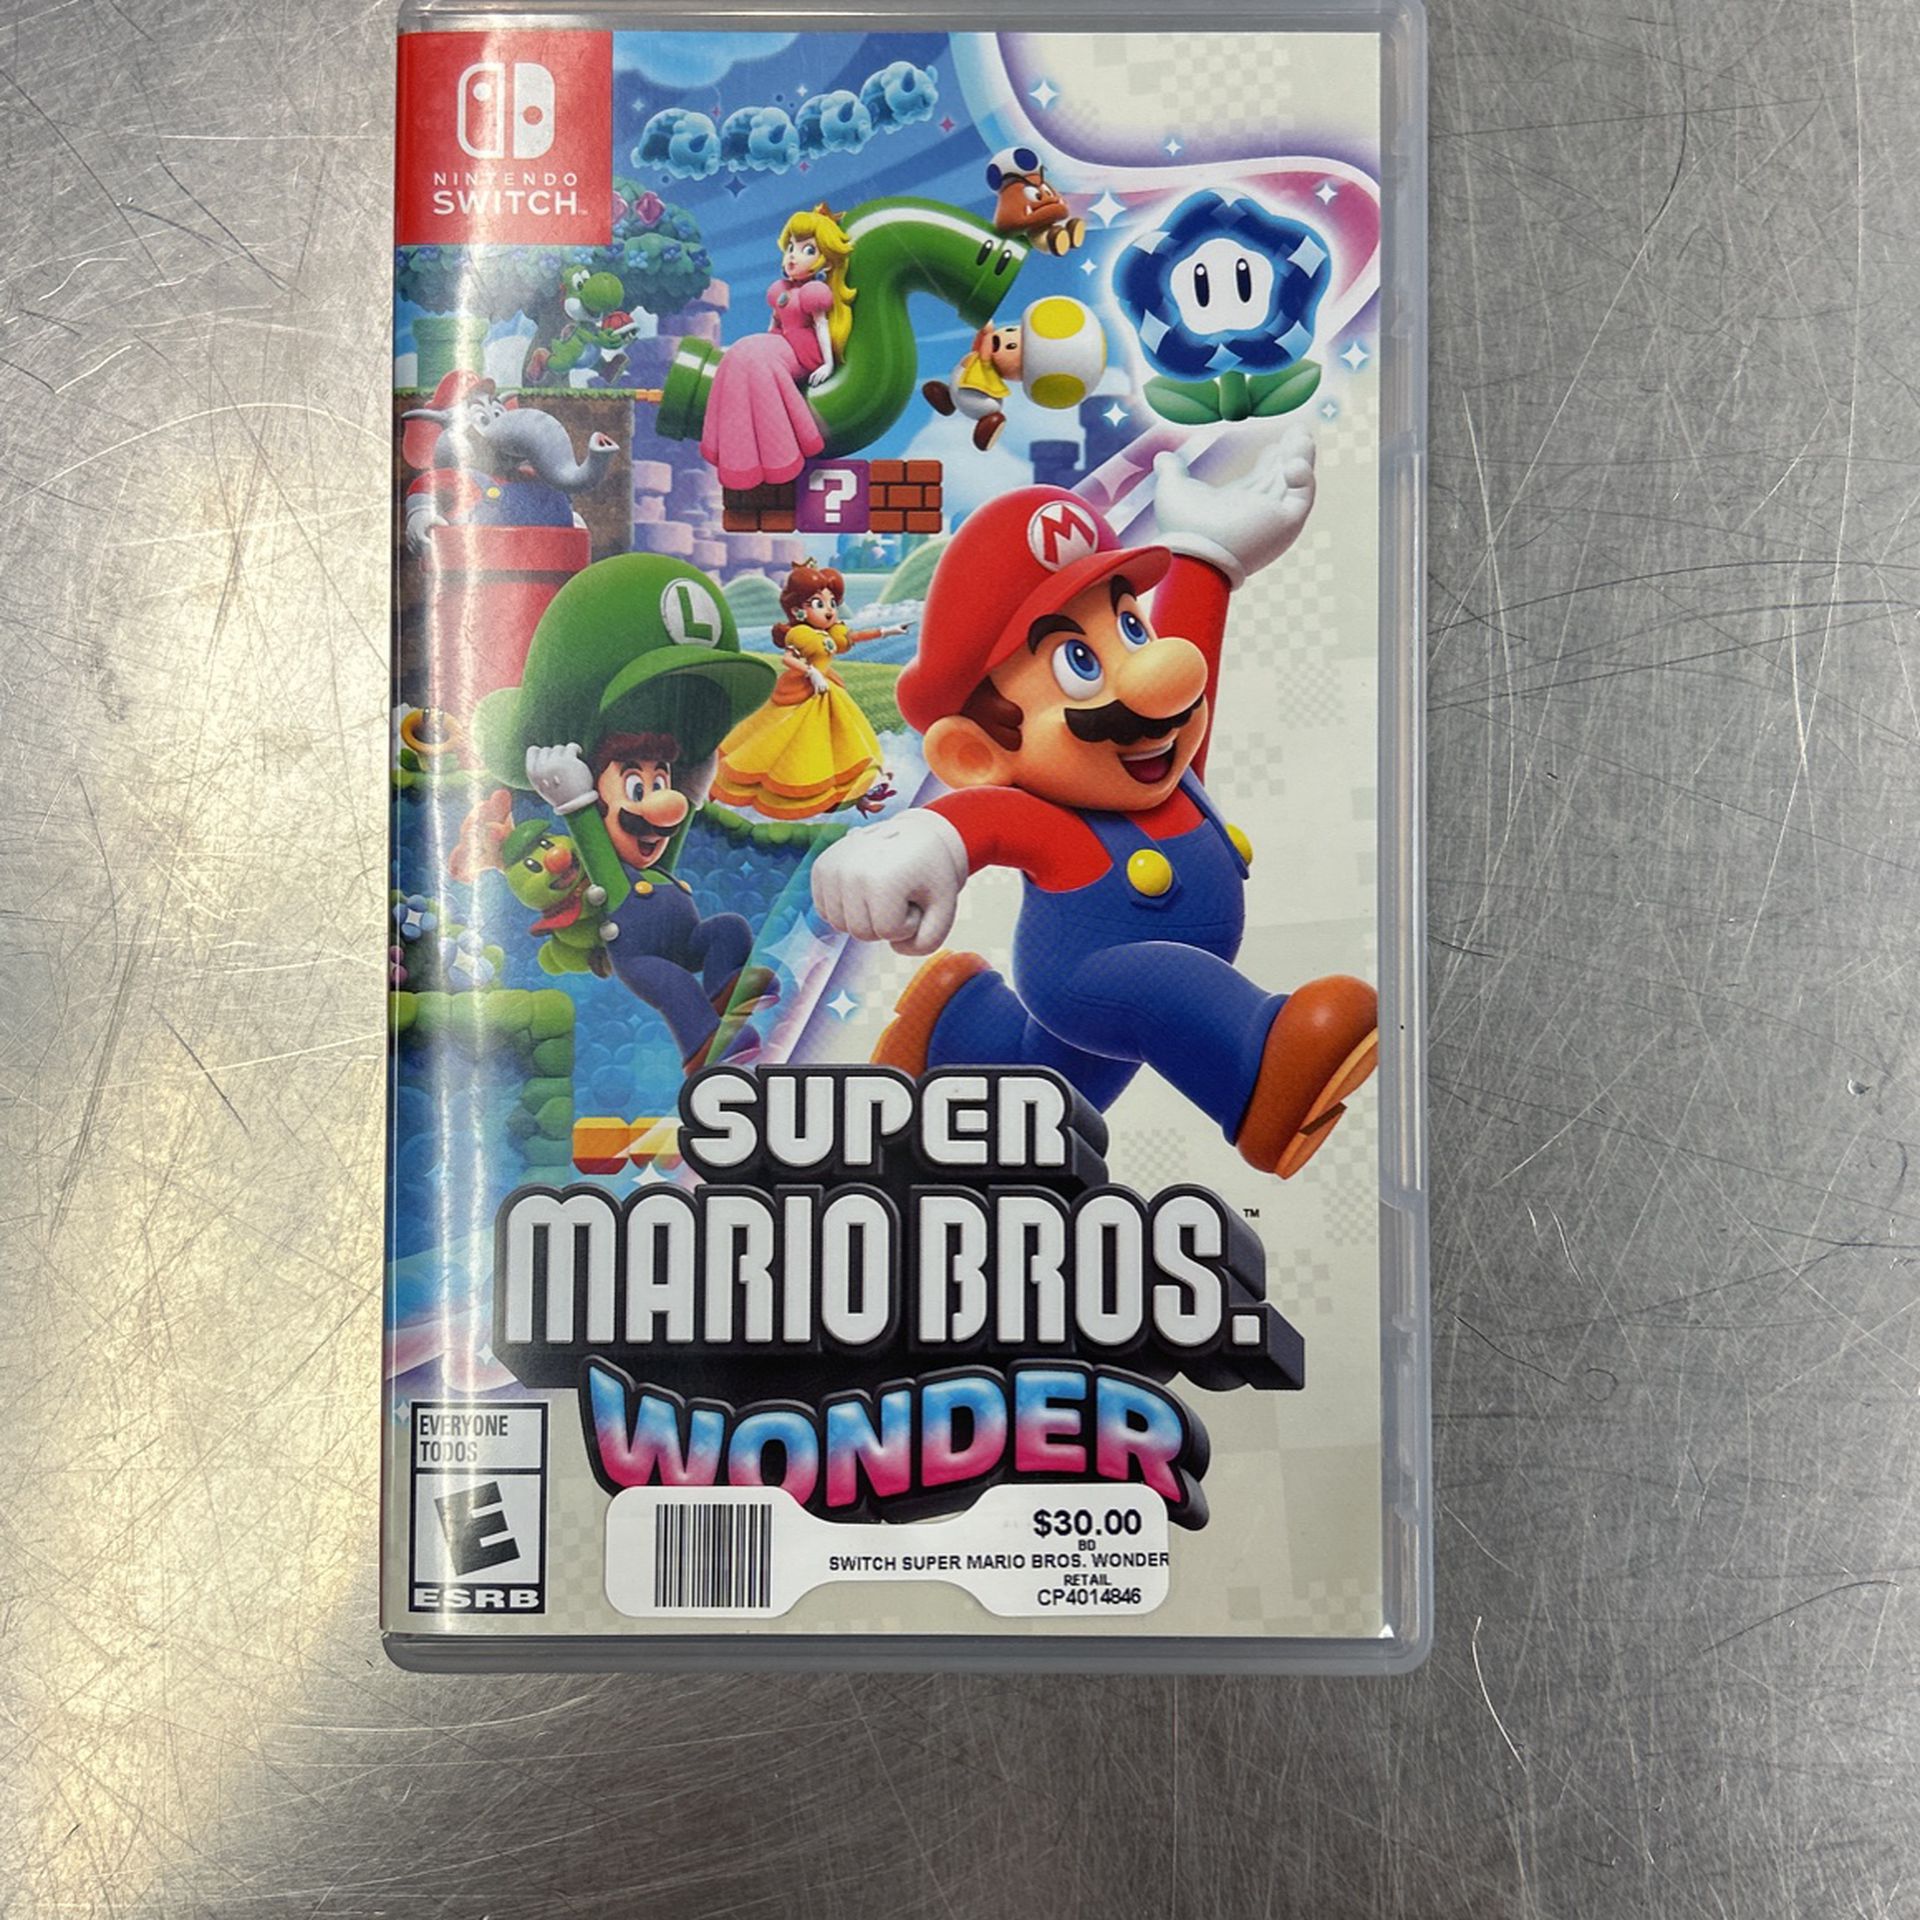 Switch super Mario Brothers wonder game